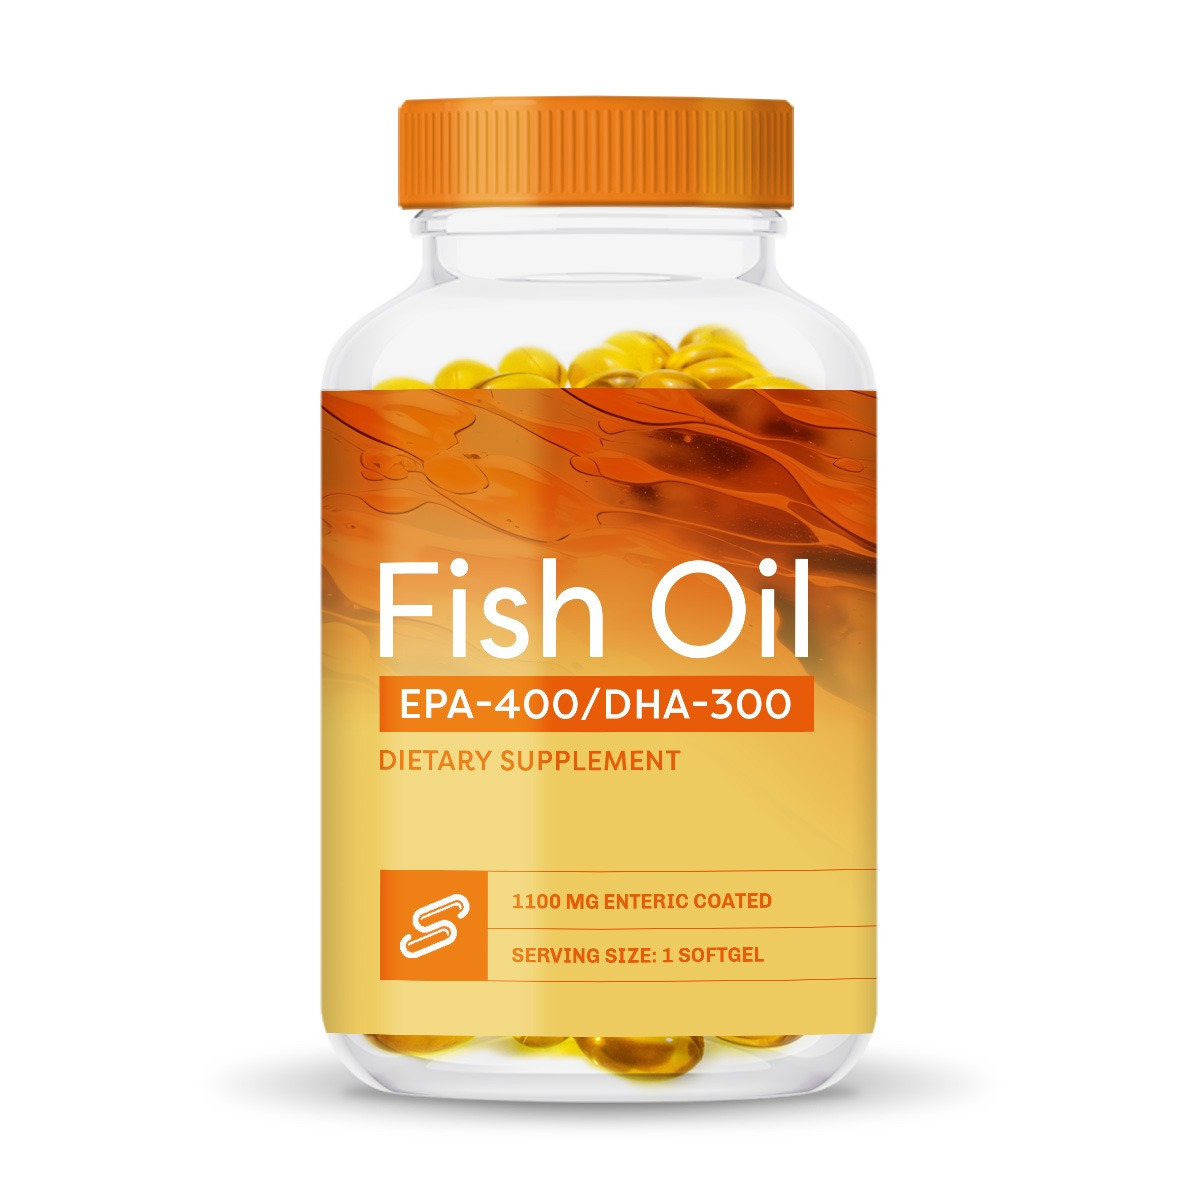 Fish Oil EPA-400/DHA-300